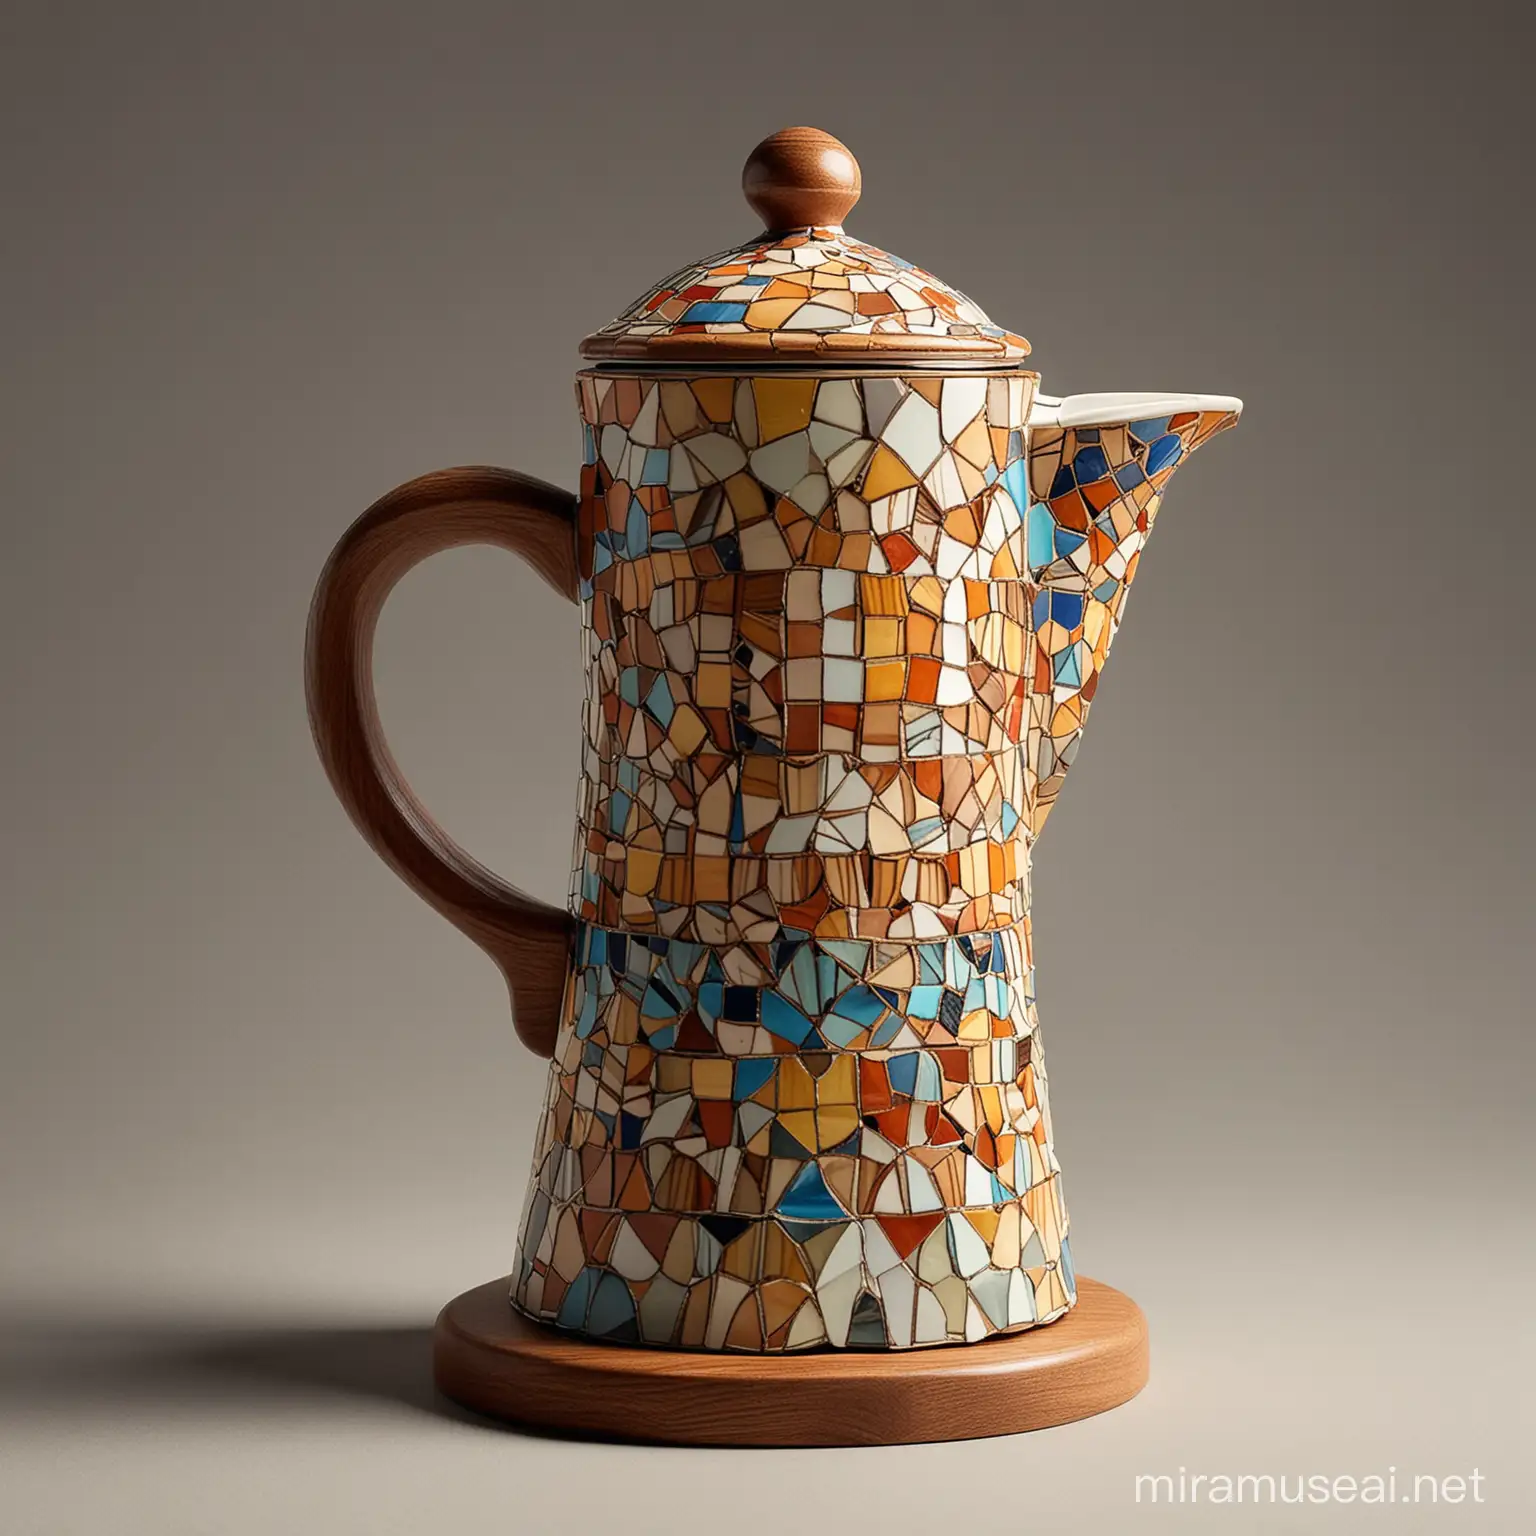 GaudInspired Organic Coffee Maker with Vibrant Mosaics